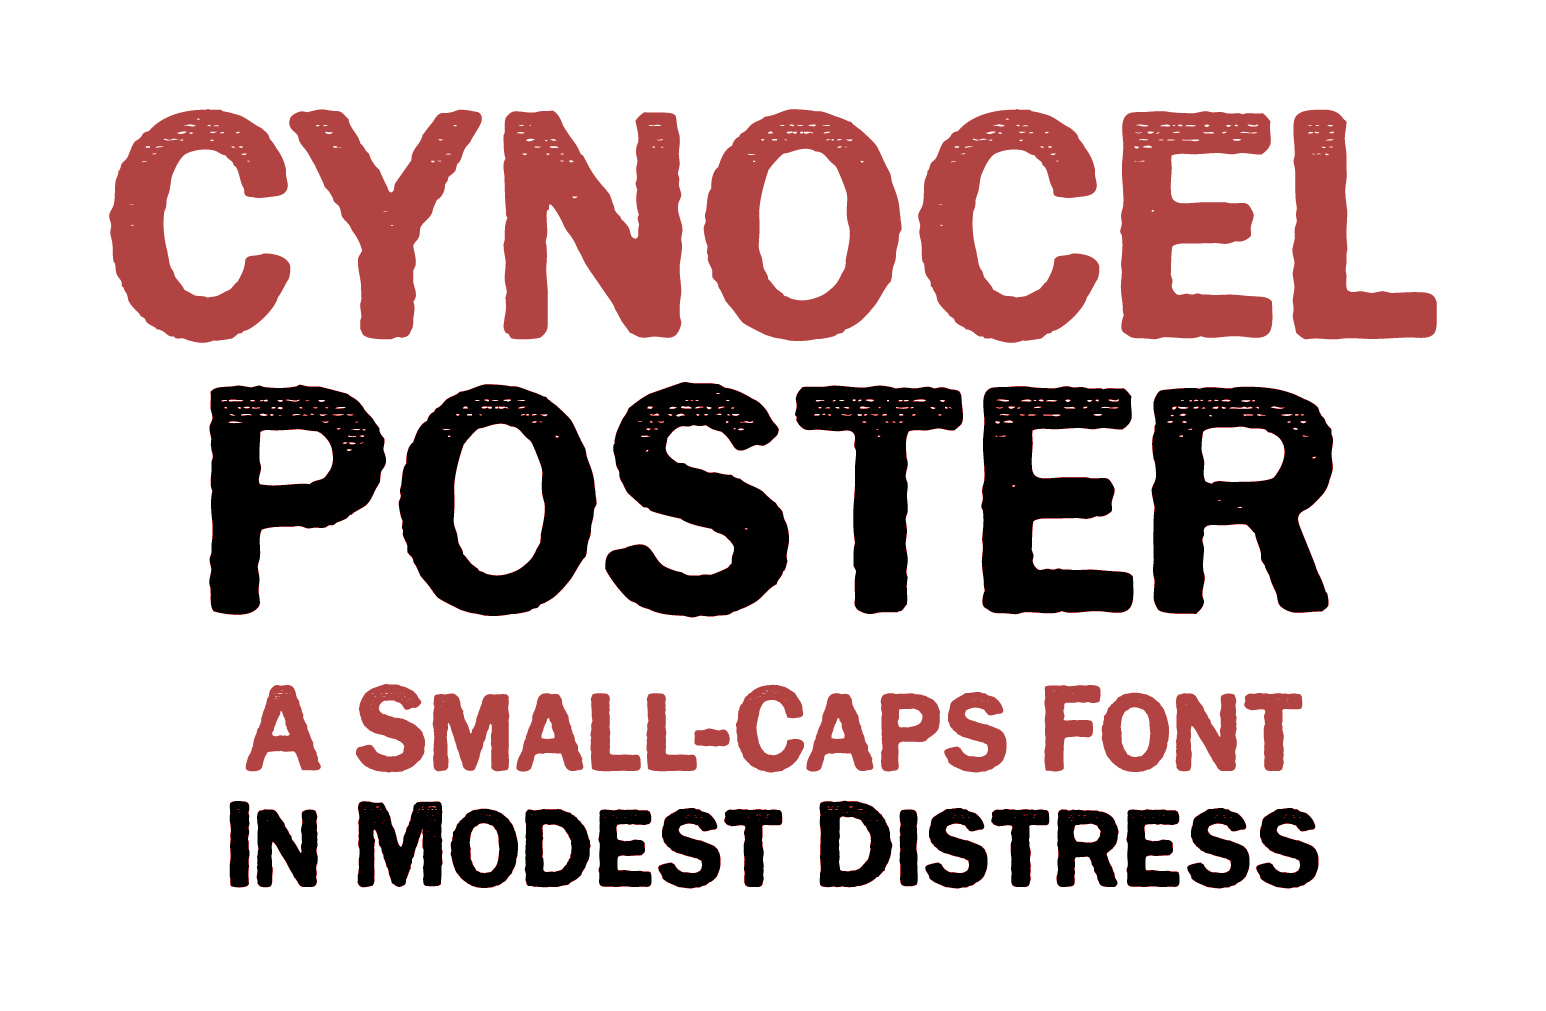 Cynocel Poster font